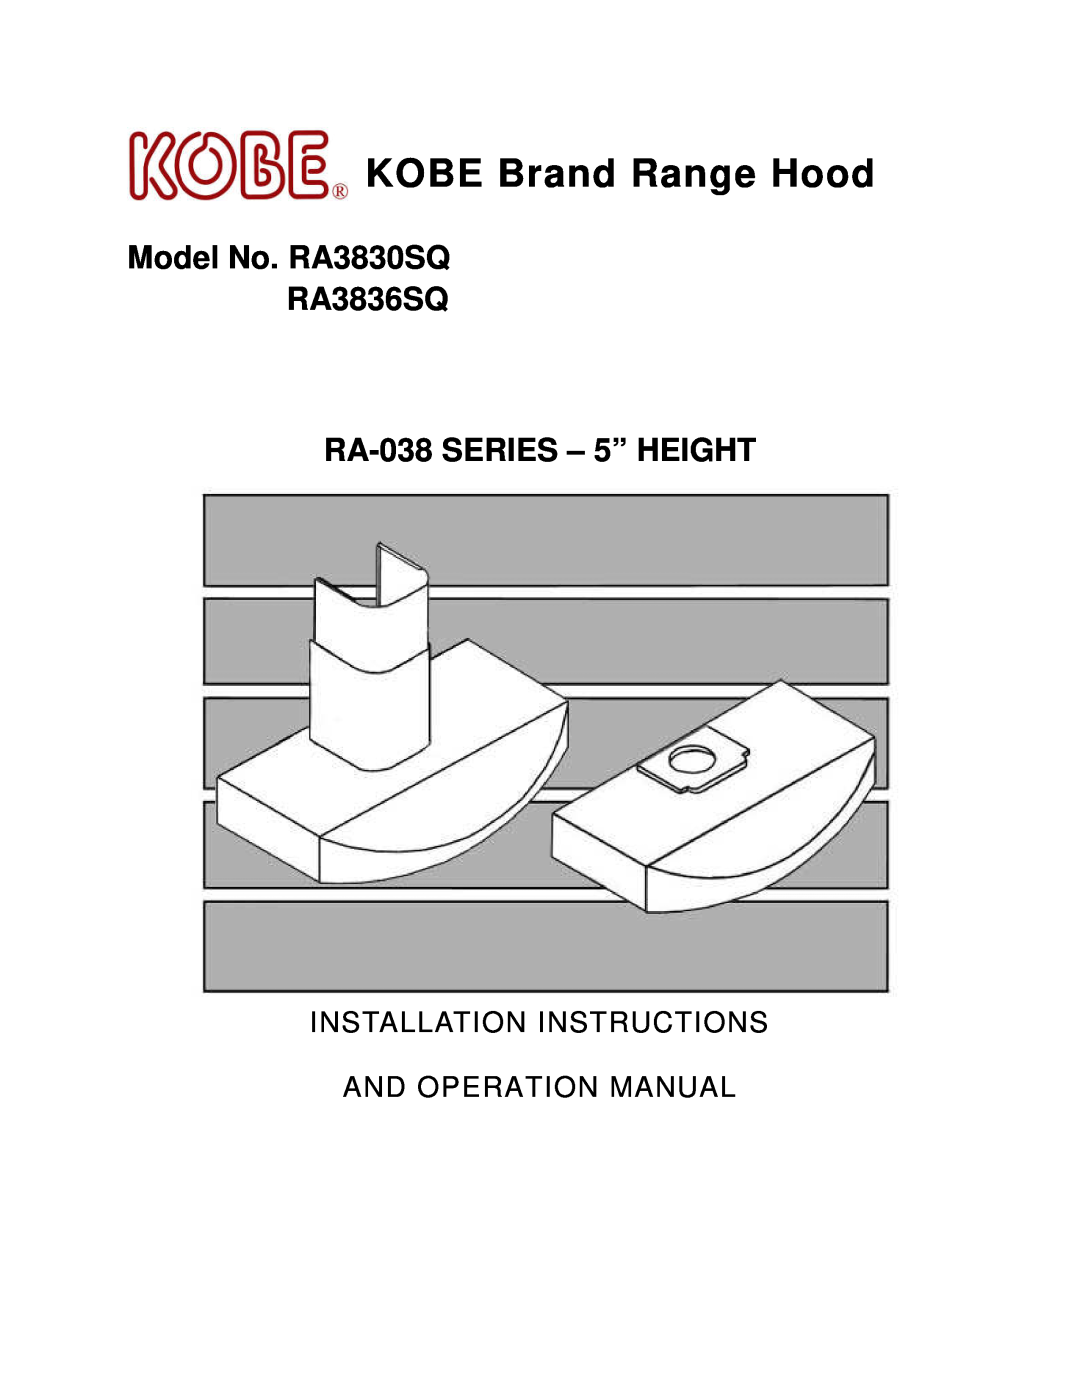 Kobe Range Hoods installation instructions KOBE Brand Range Hood, Model No. RA3830SQ RA3836SQ, RA-038SERIES - 5” HEIGHT 